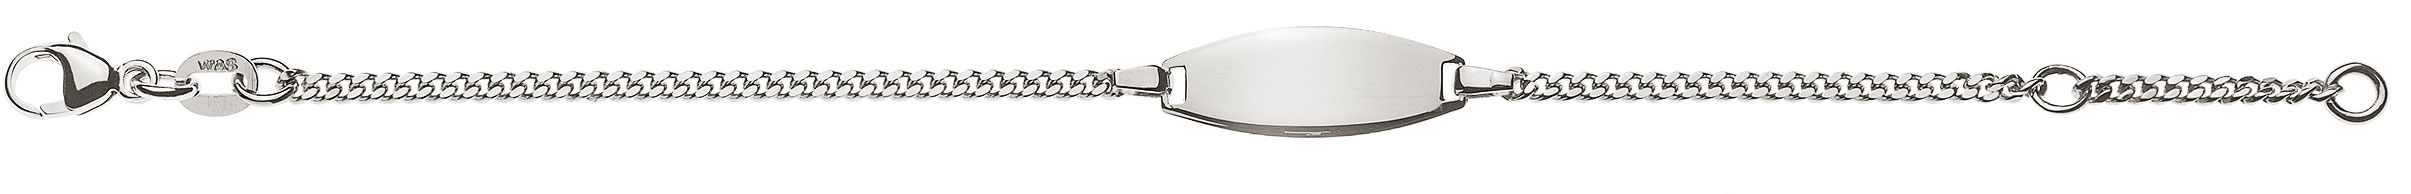 AURONOS Prestige ID-Bracelet en or blanc 18k Chaîne blindée polie 14cm